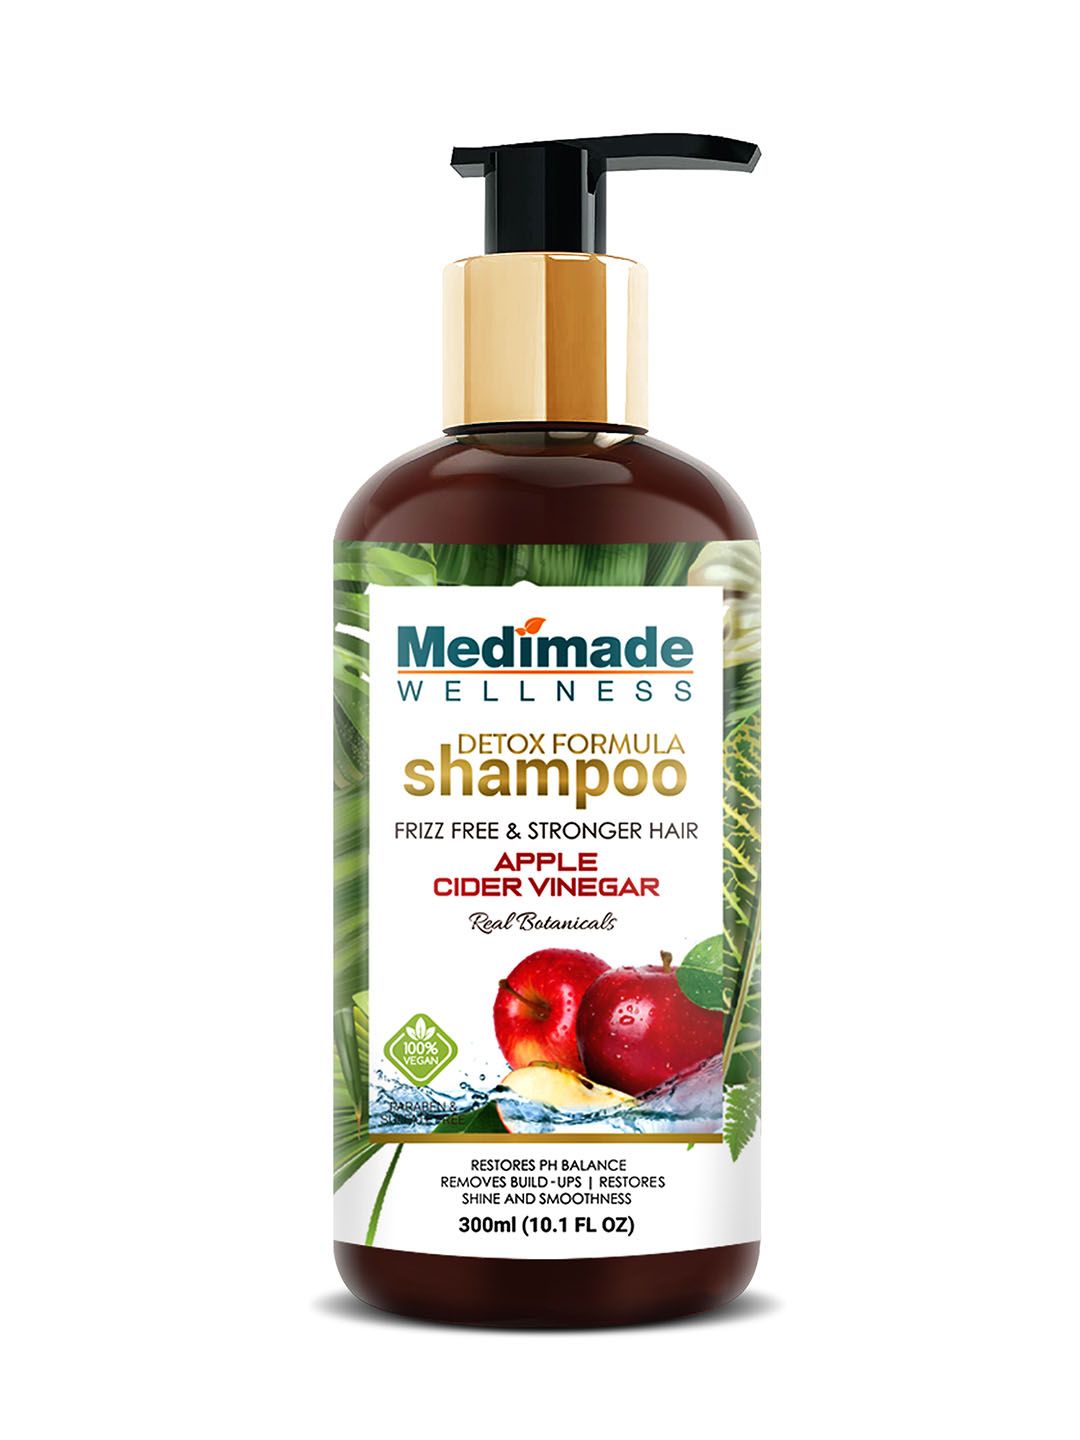 Medimade Unisex Detox Formula Shampoo with Organic Apple Cider Vinegar - 300 ml Price in India